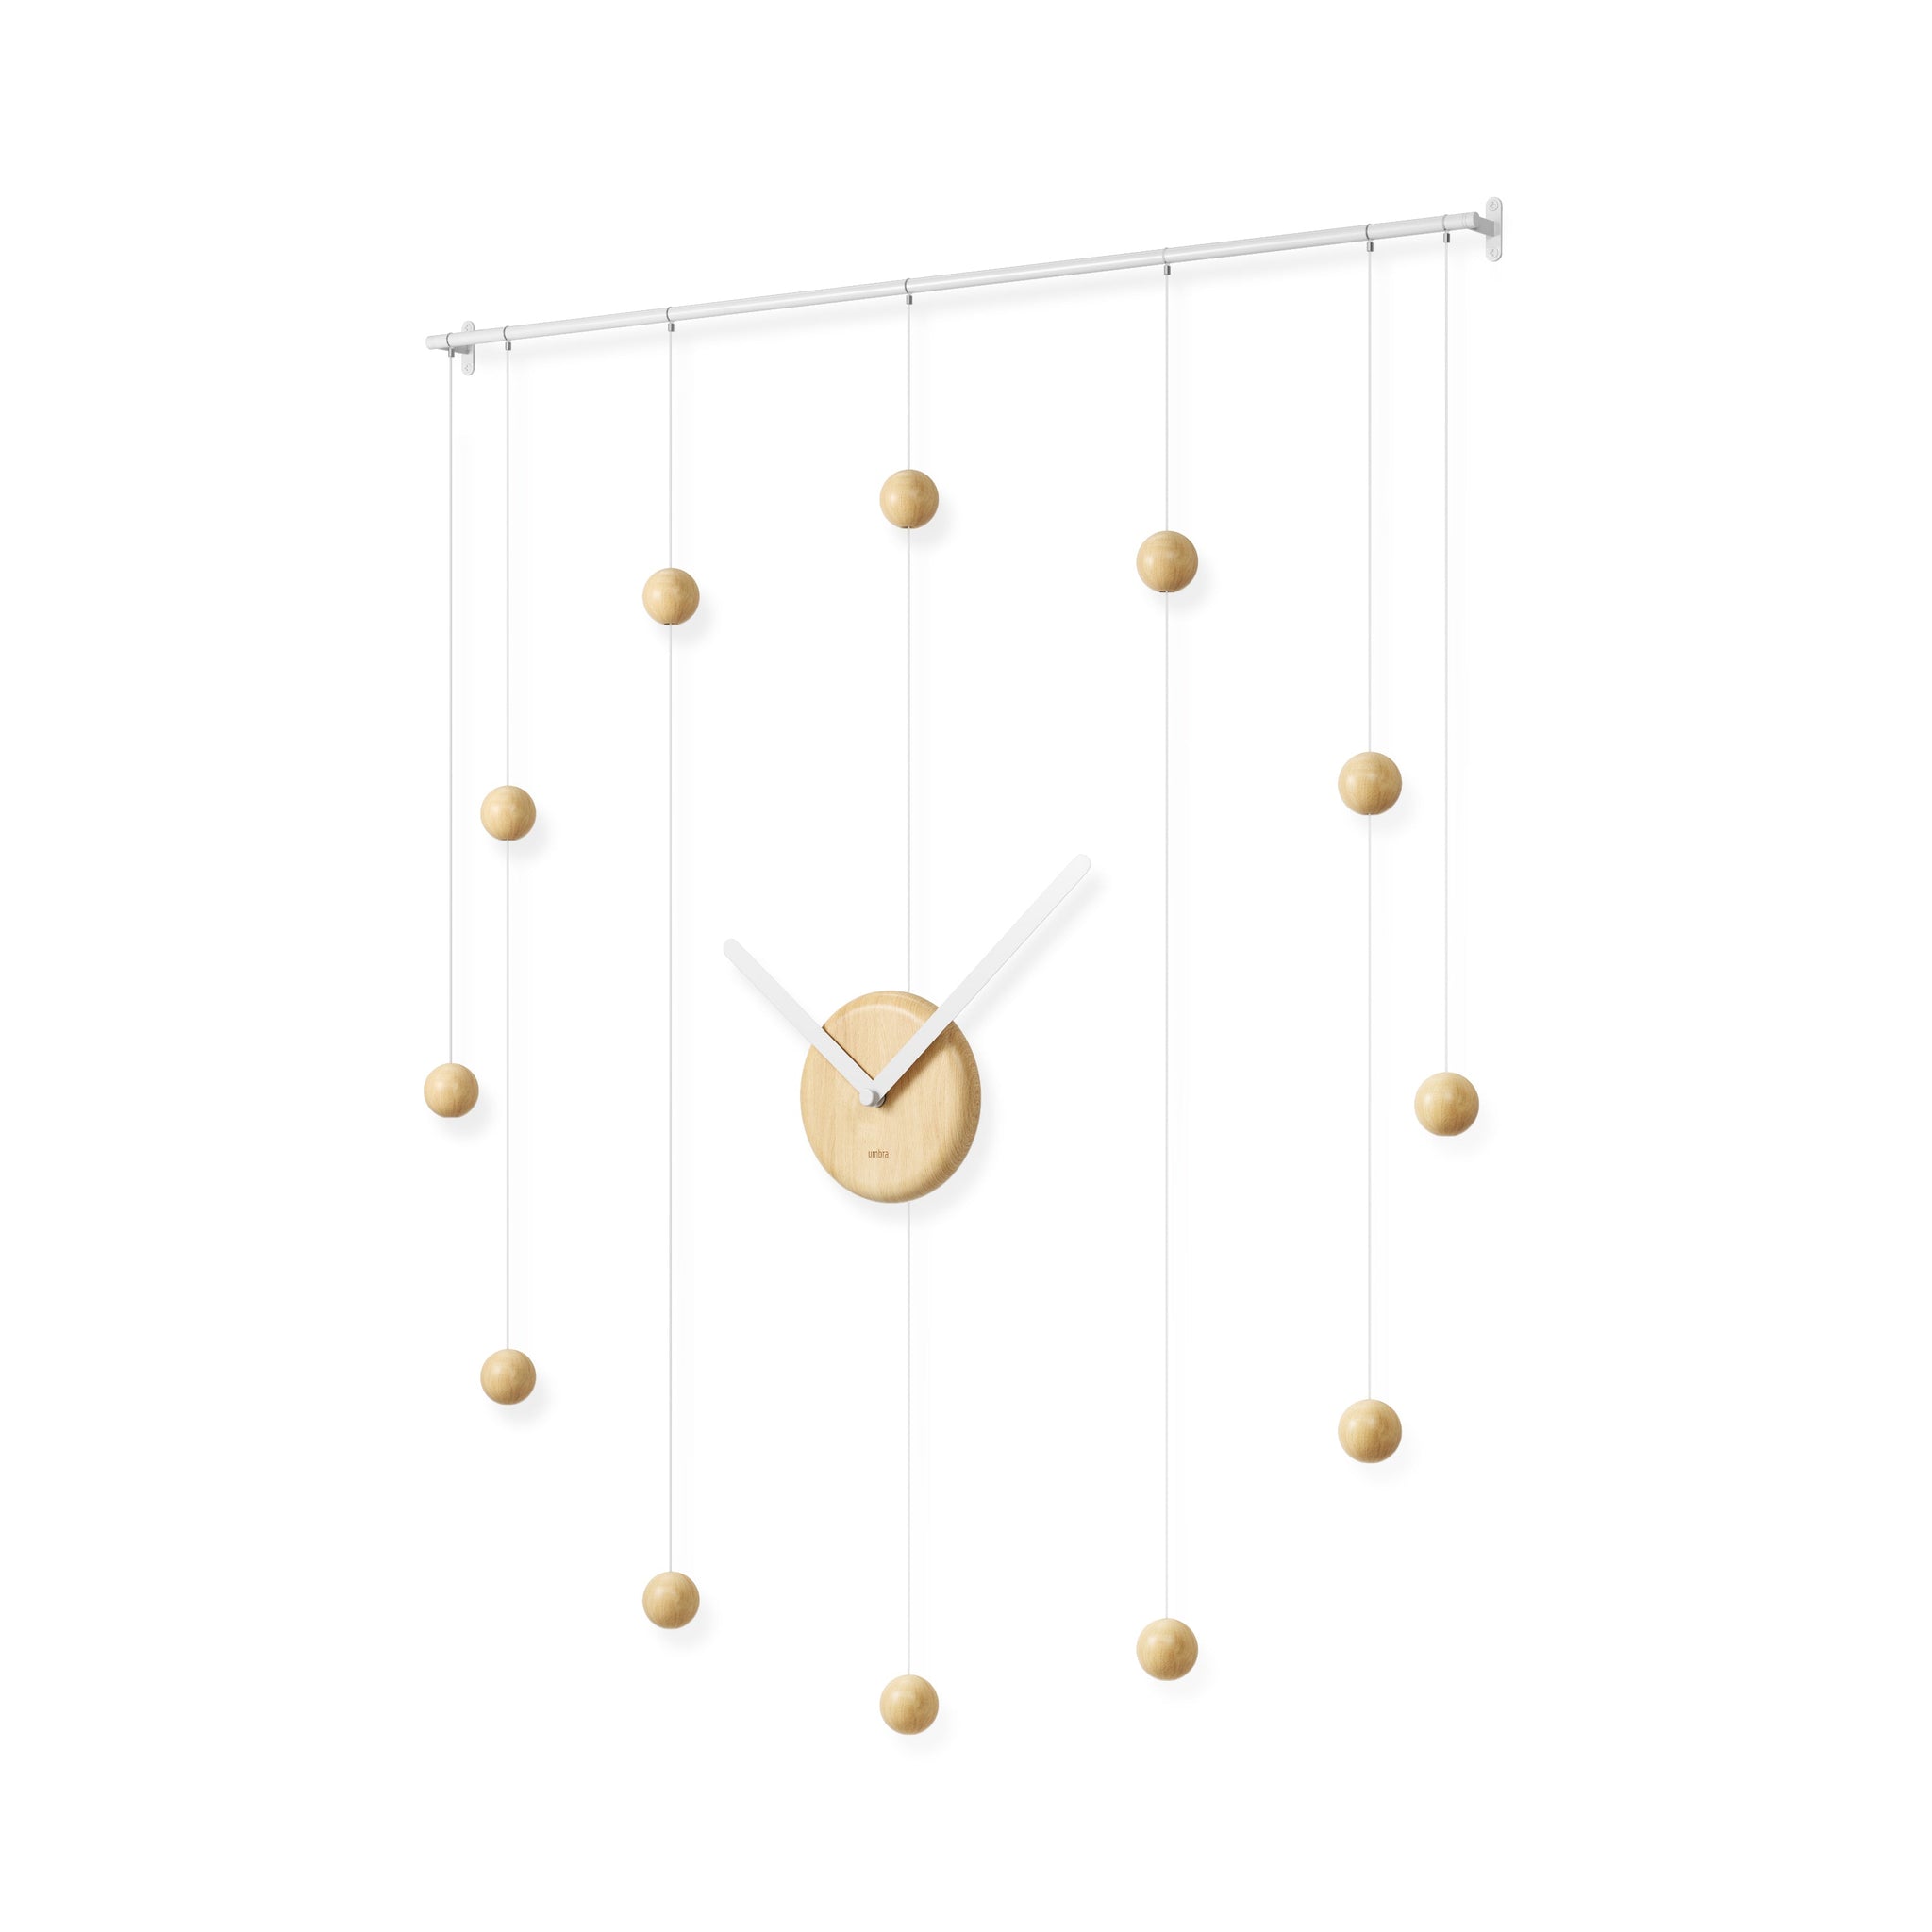 Hangtime Wall Clock